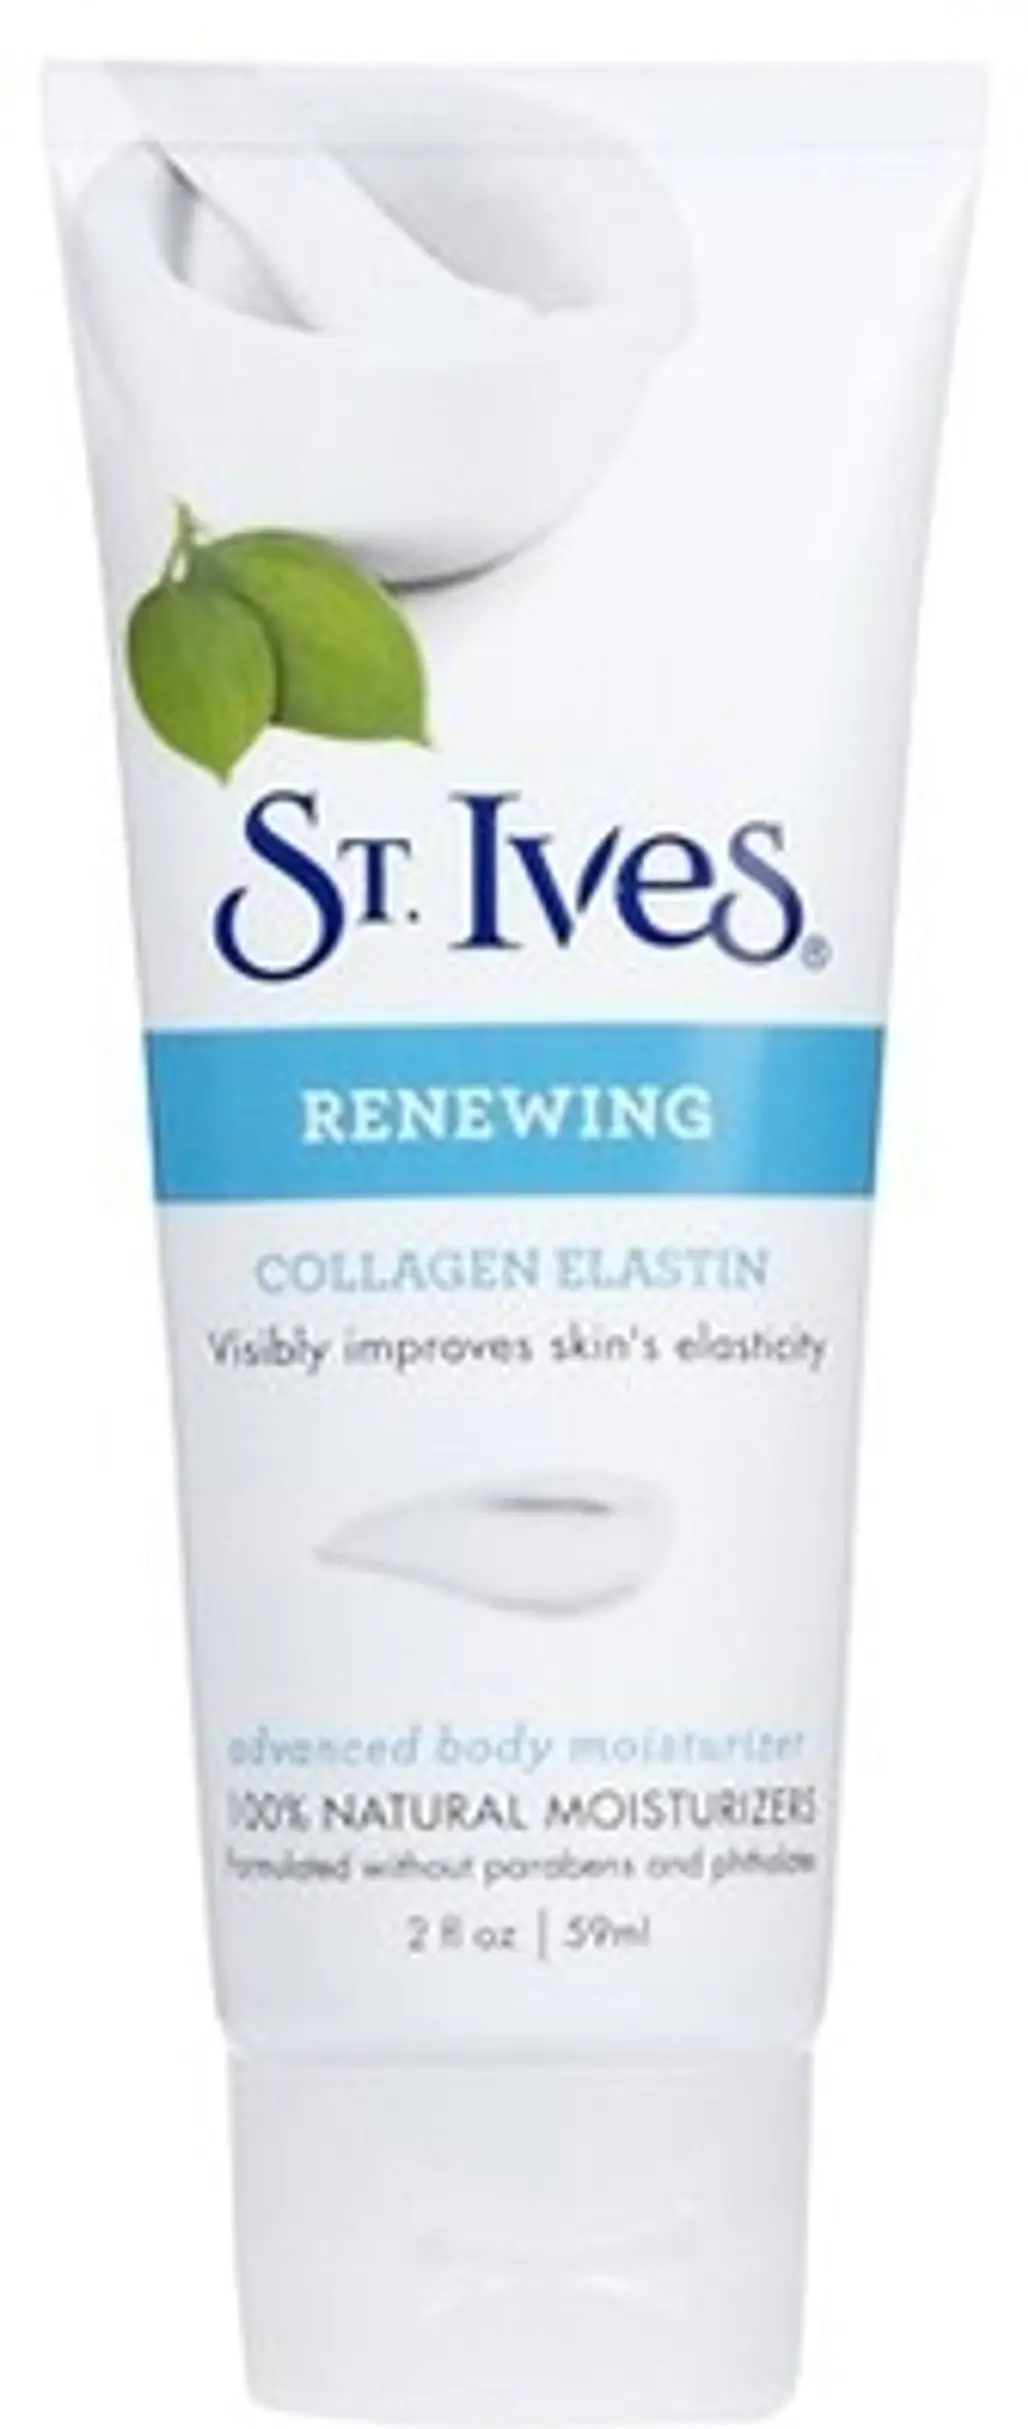 St. Ives Advanced Collagen Elastin Body Moisturizer